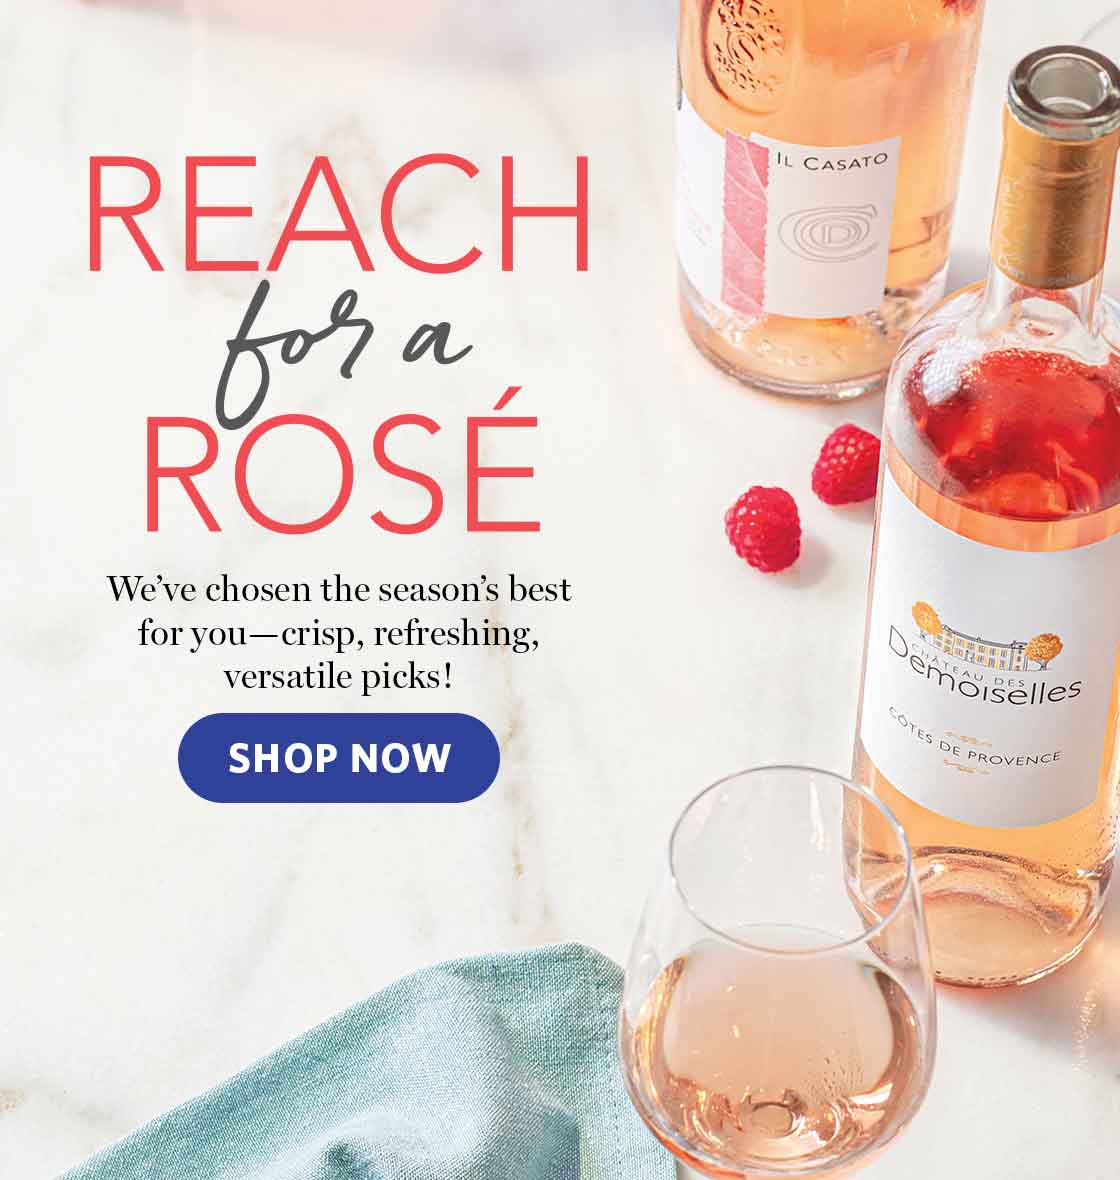 Reach for a rosé